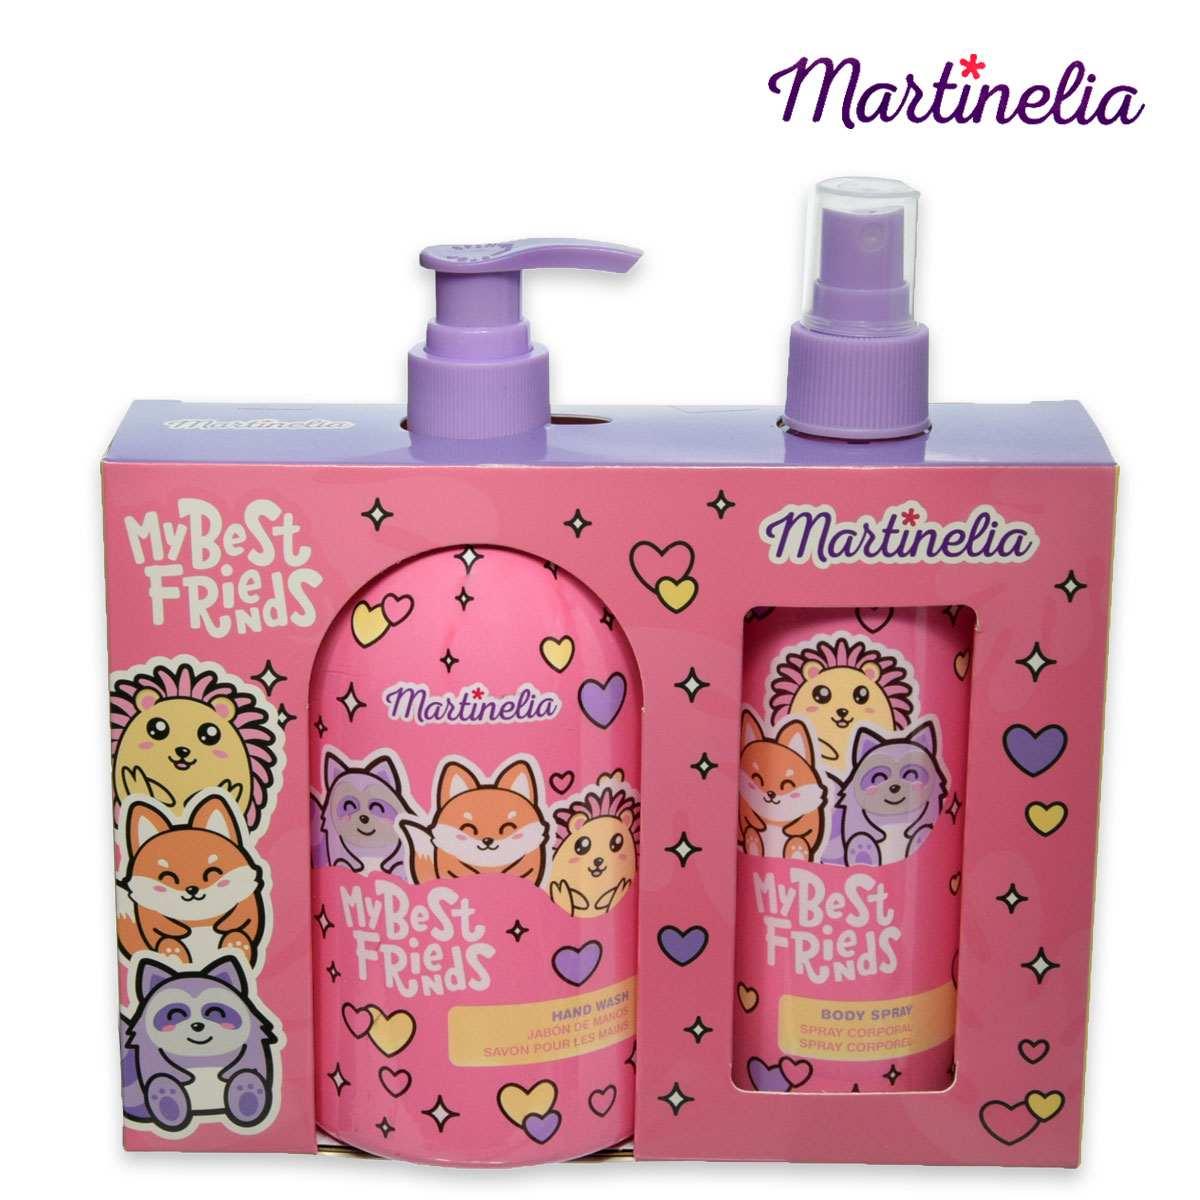 Martinelia Set Hand Wash And Body Spray